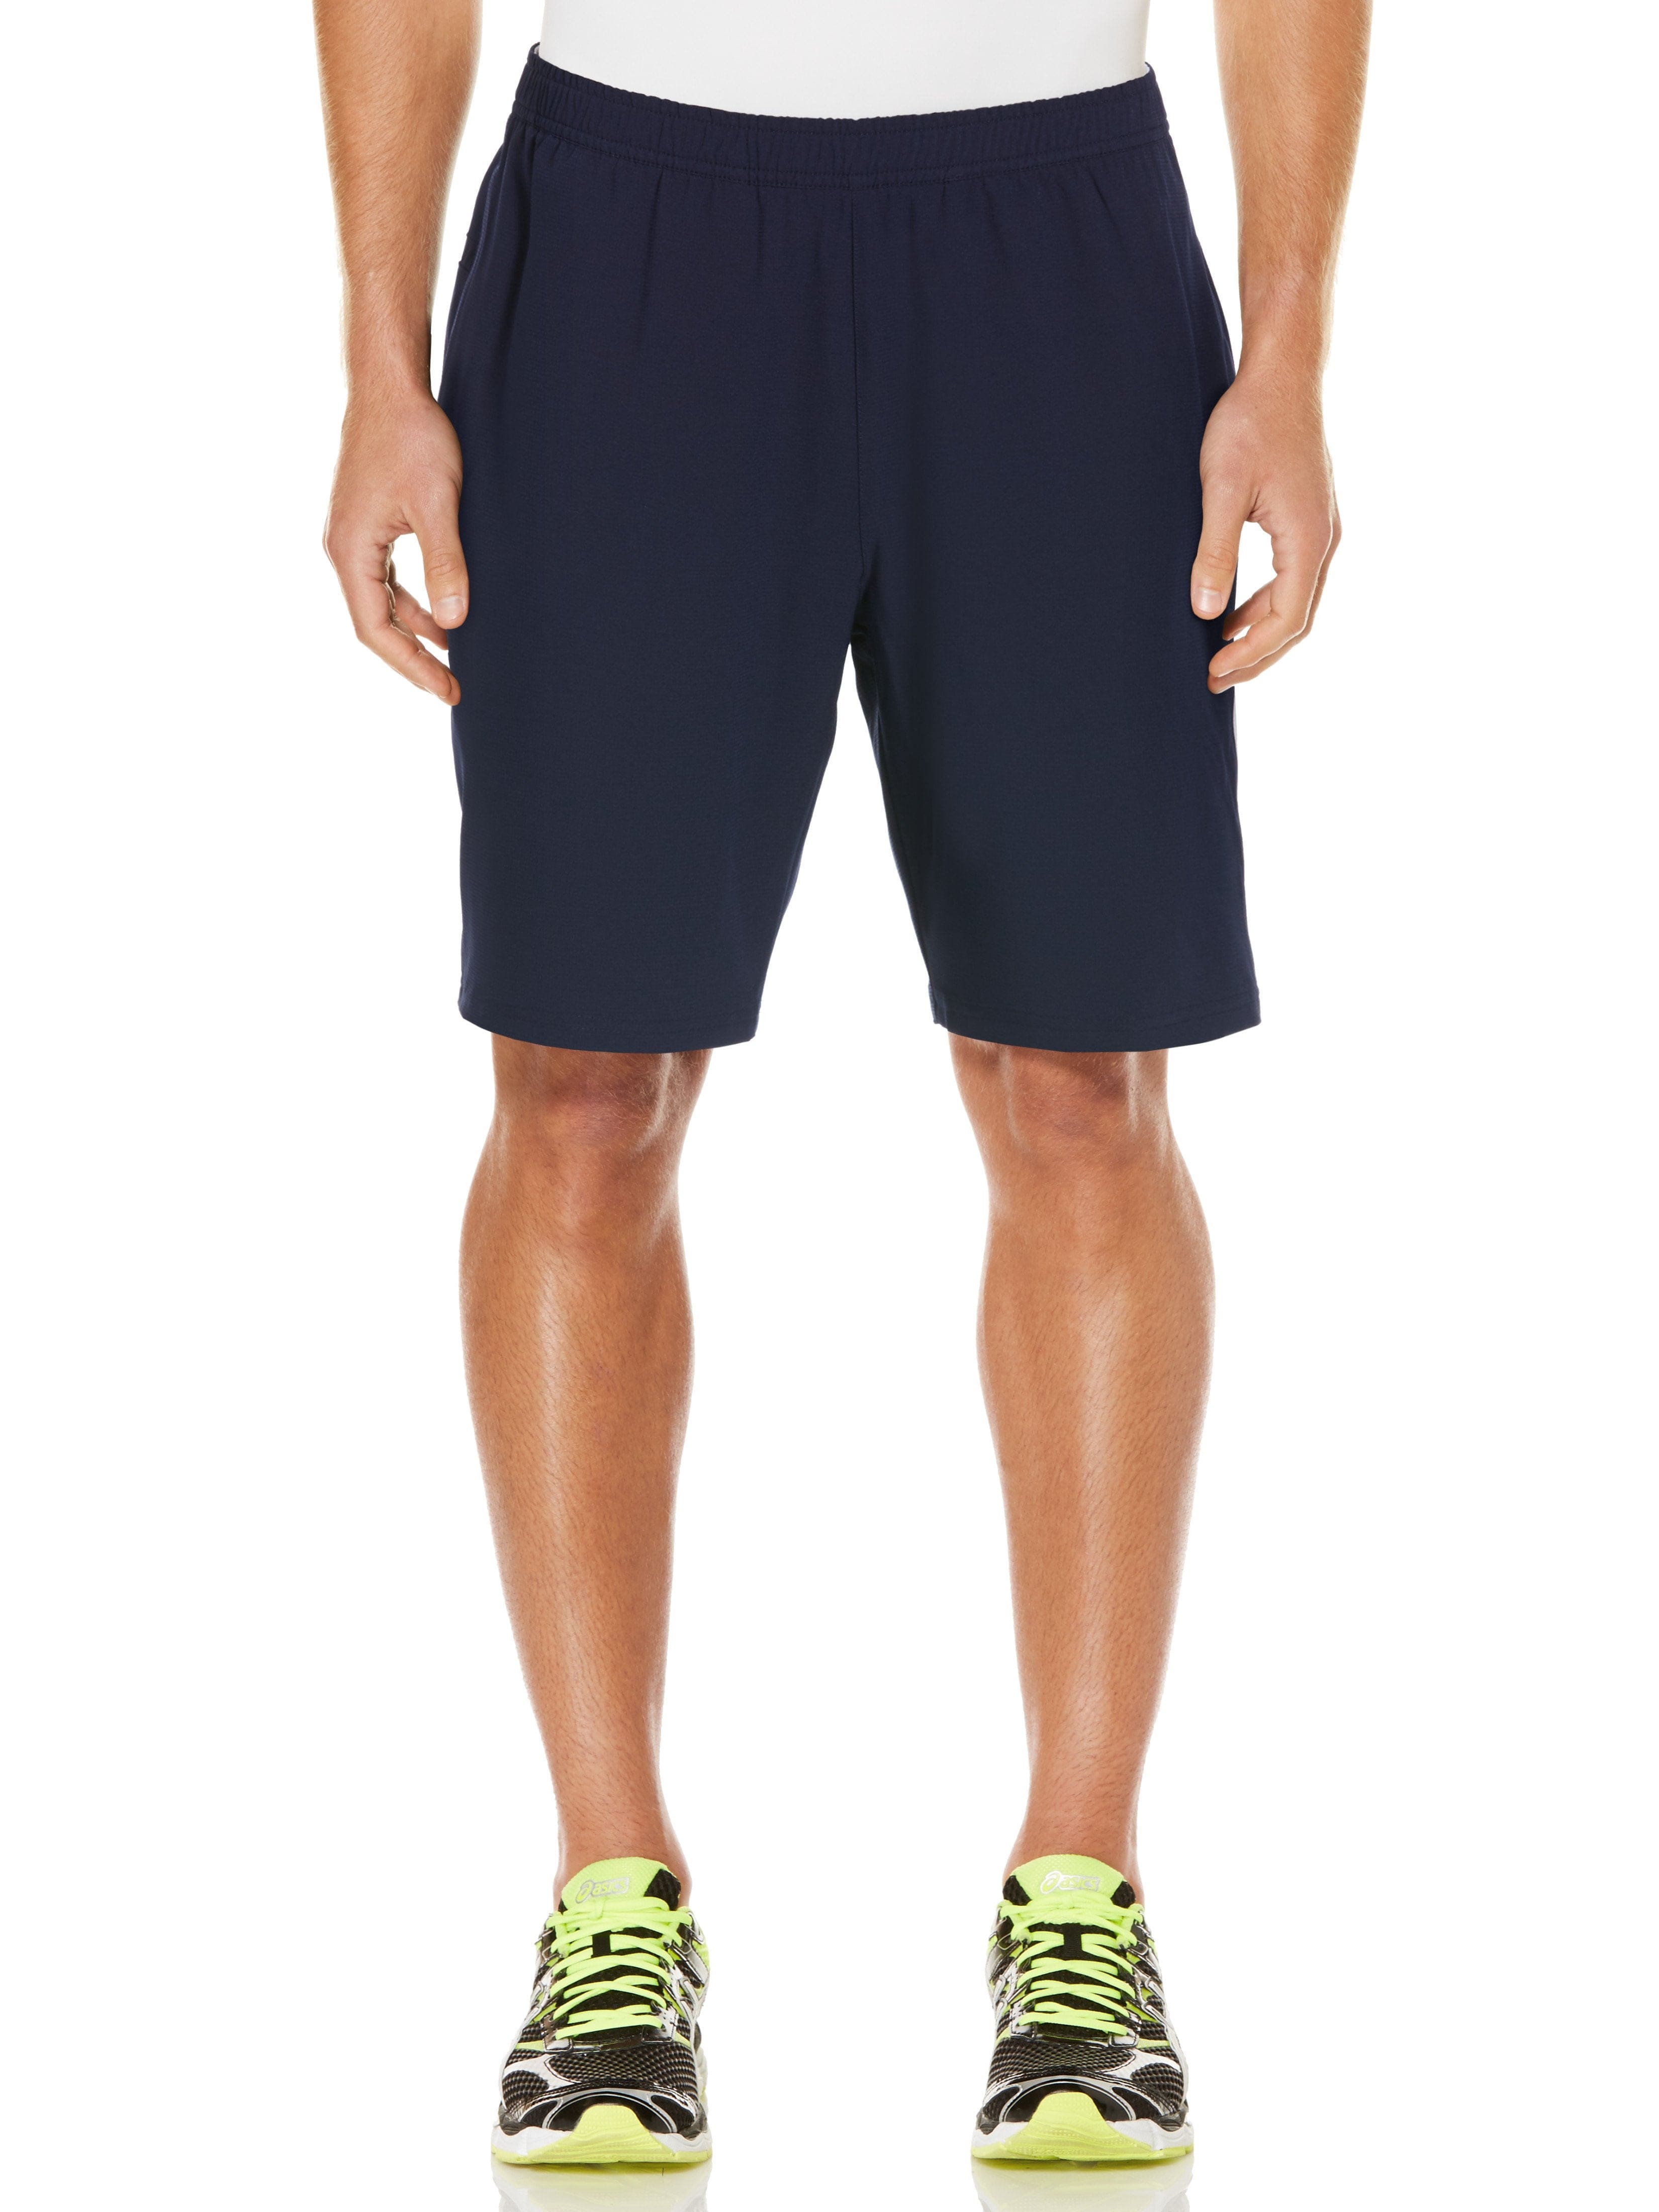 Grand Slam Mens Athletic Shorts, Size Large, Navy Blue, Polyester/Elastane | Golf Apparel Shop